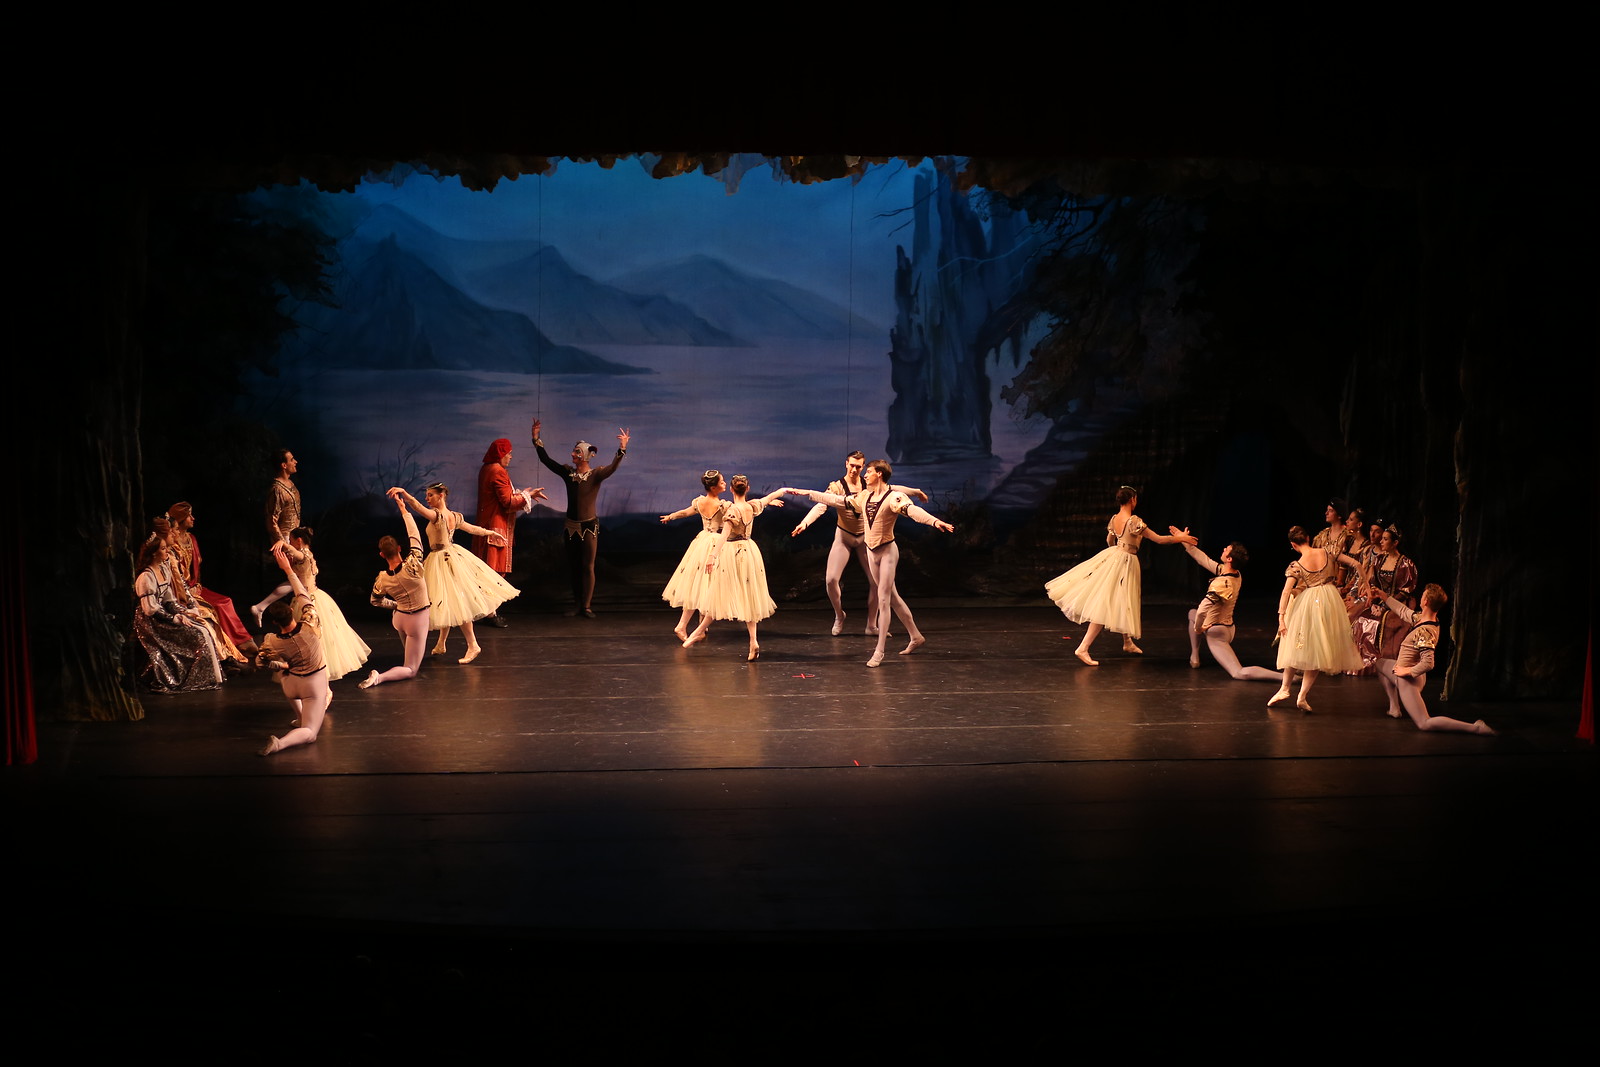 Russian Ballet "Swan Lake"